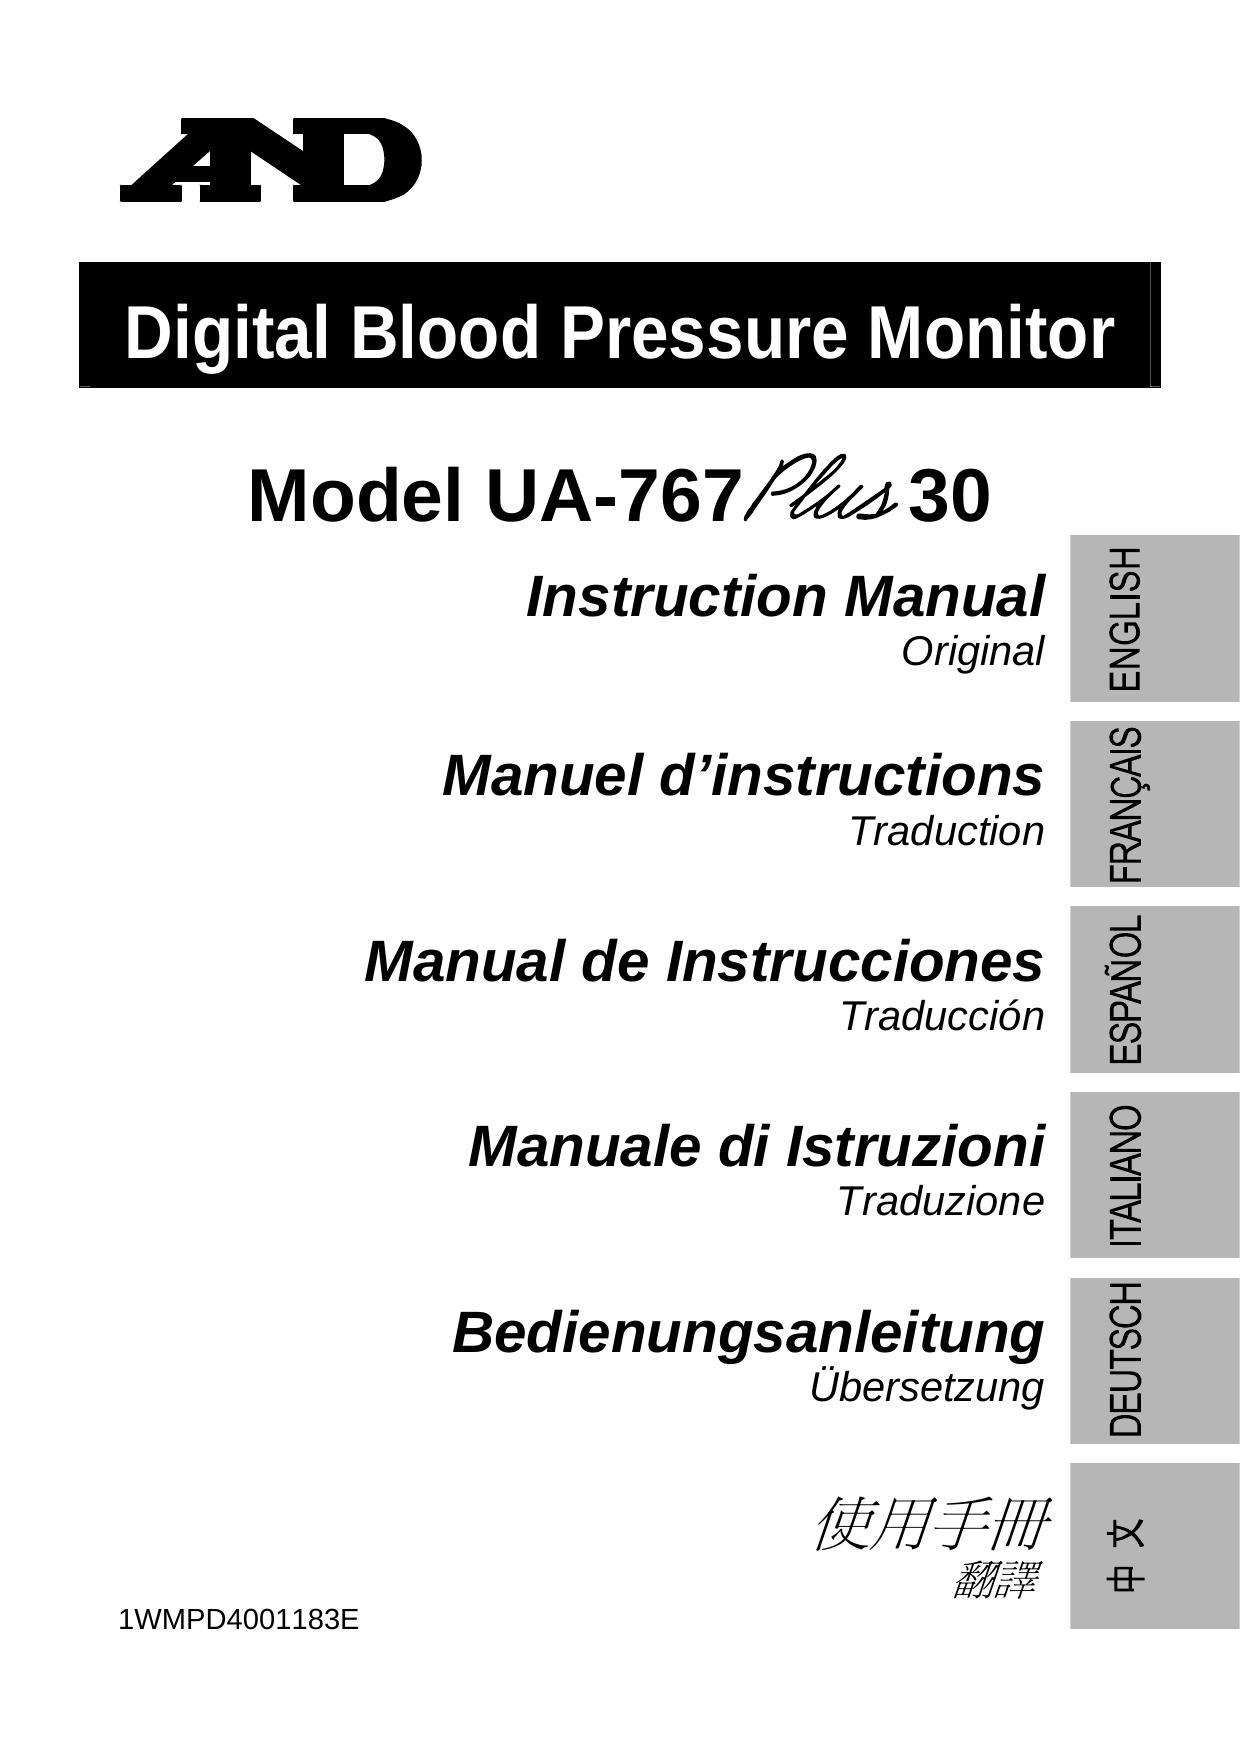 ad-digital-blood-pressure-monitor-model-ua-7674430-instruction-manual.pdf